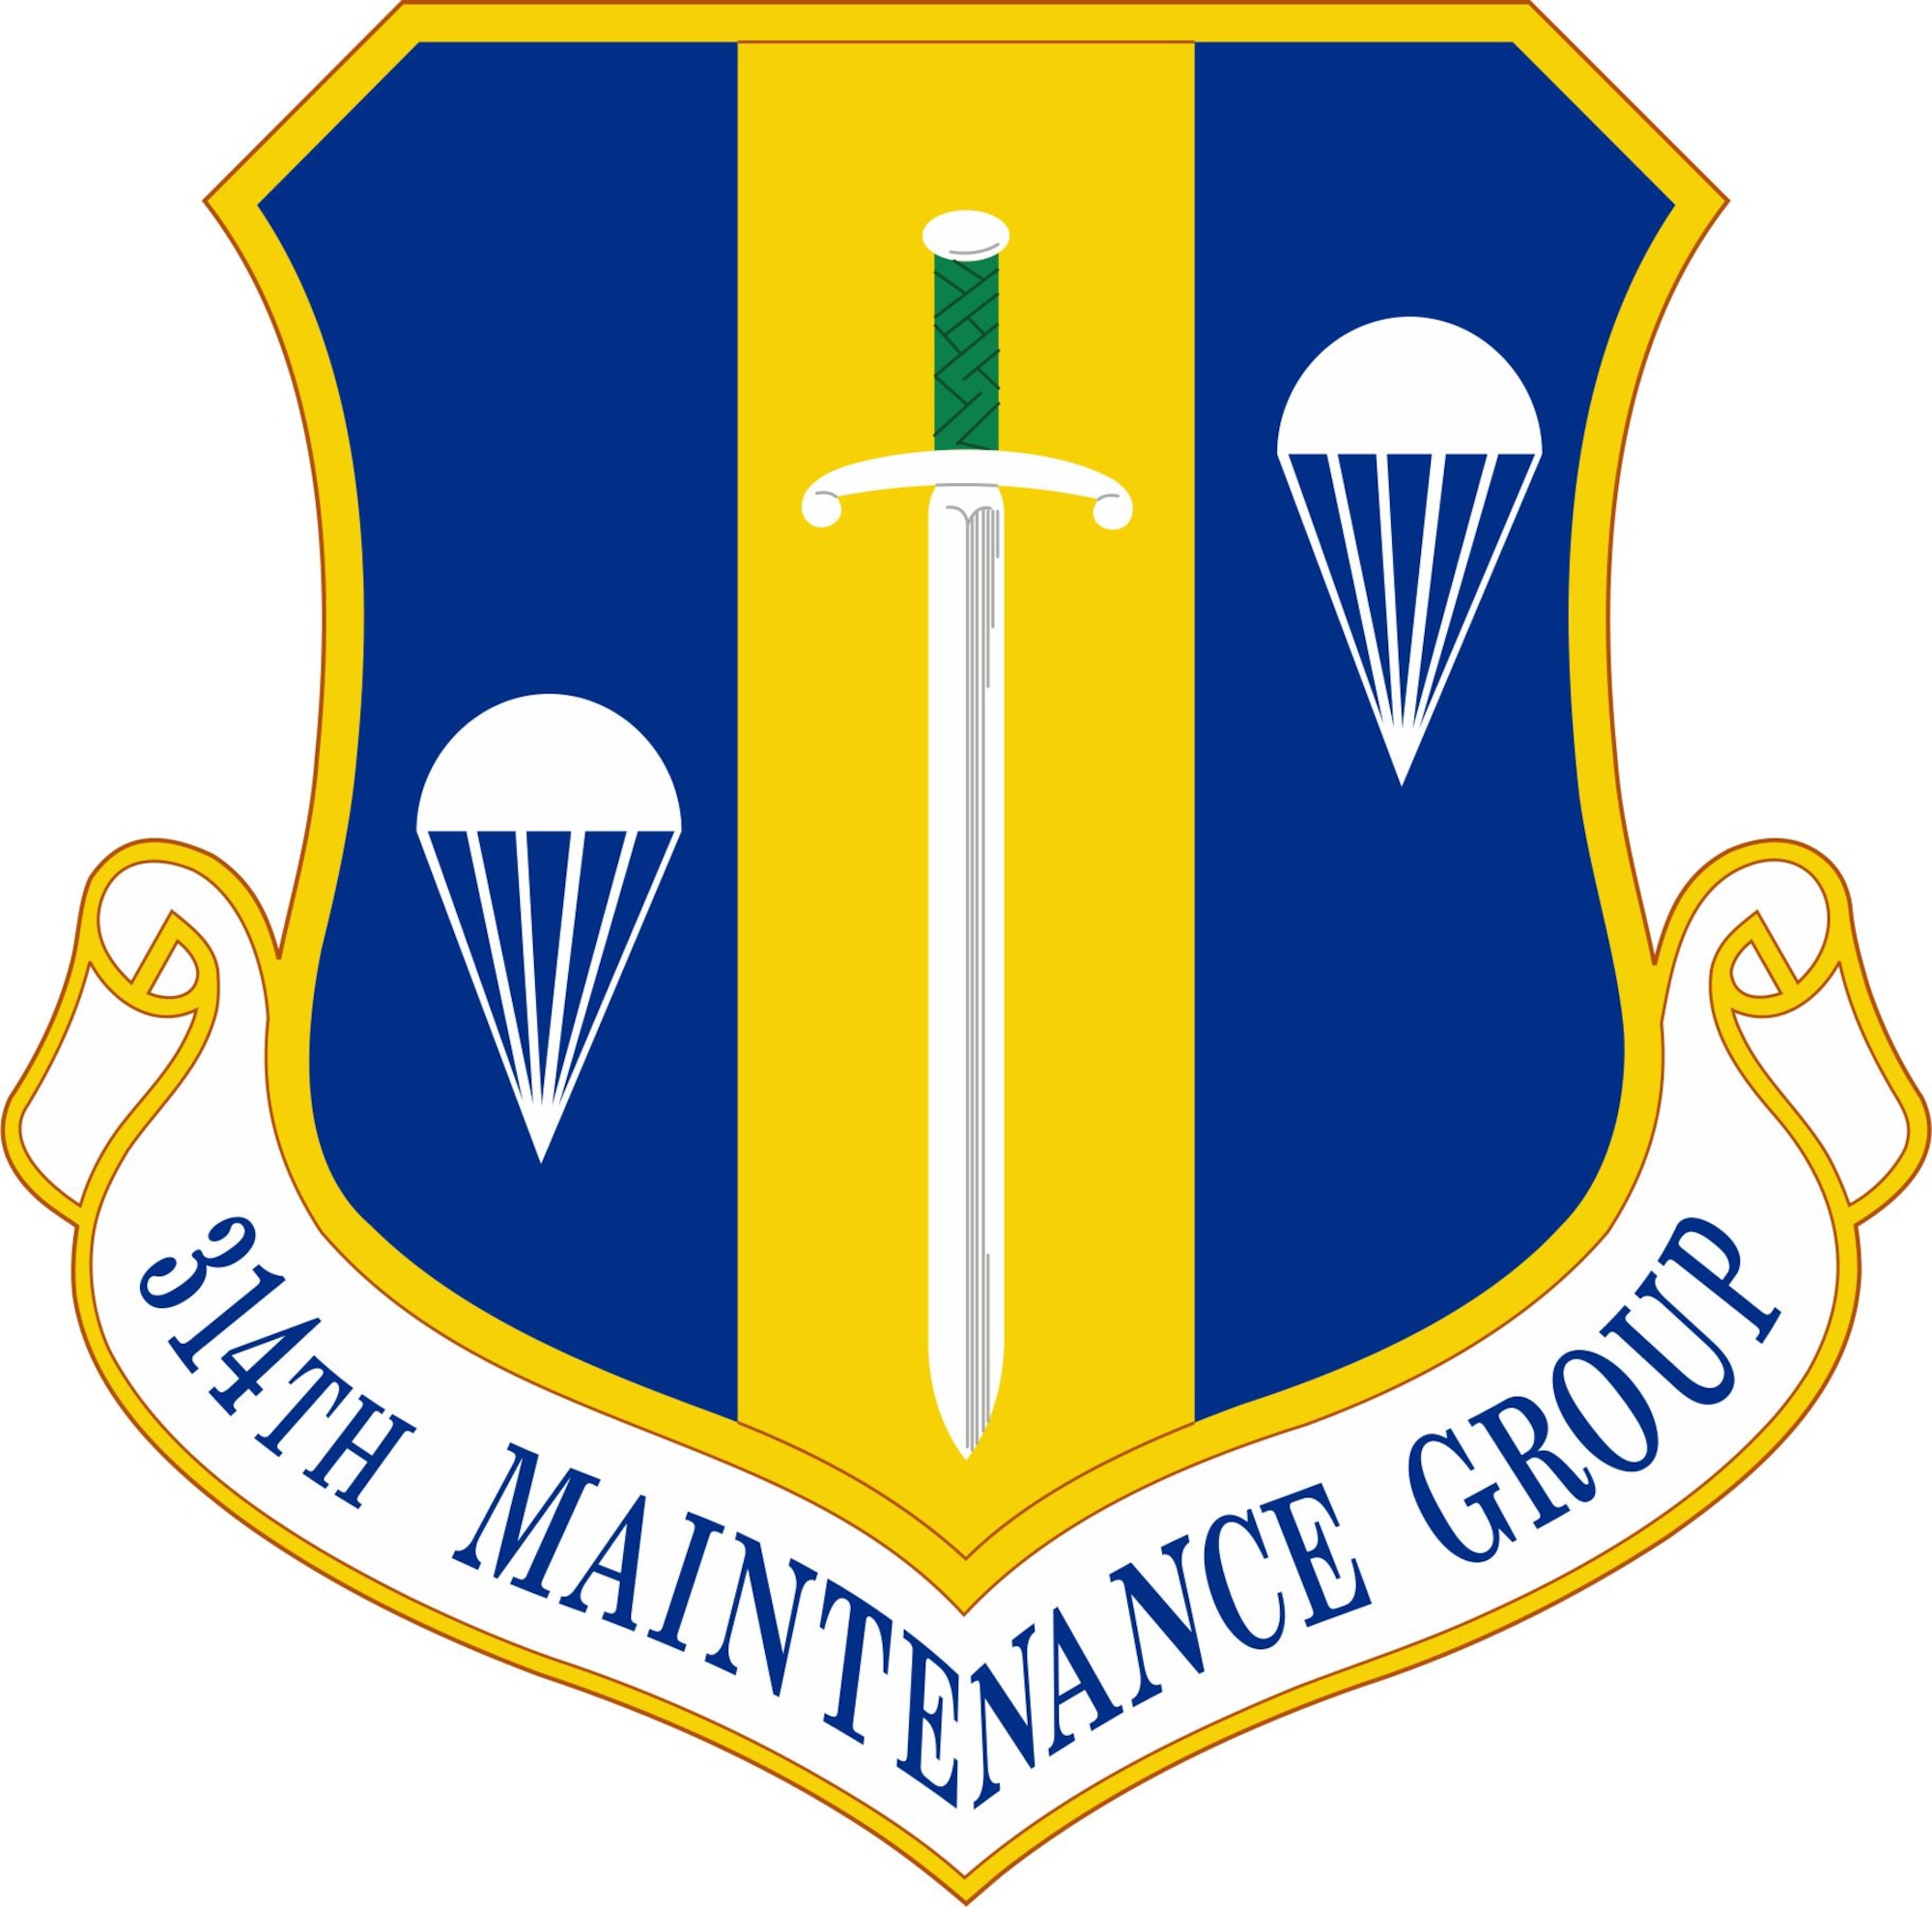 314 Maintenance Group